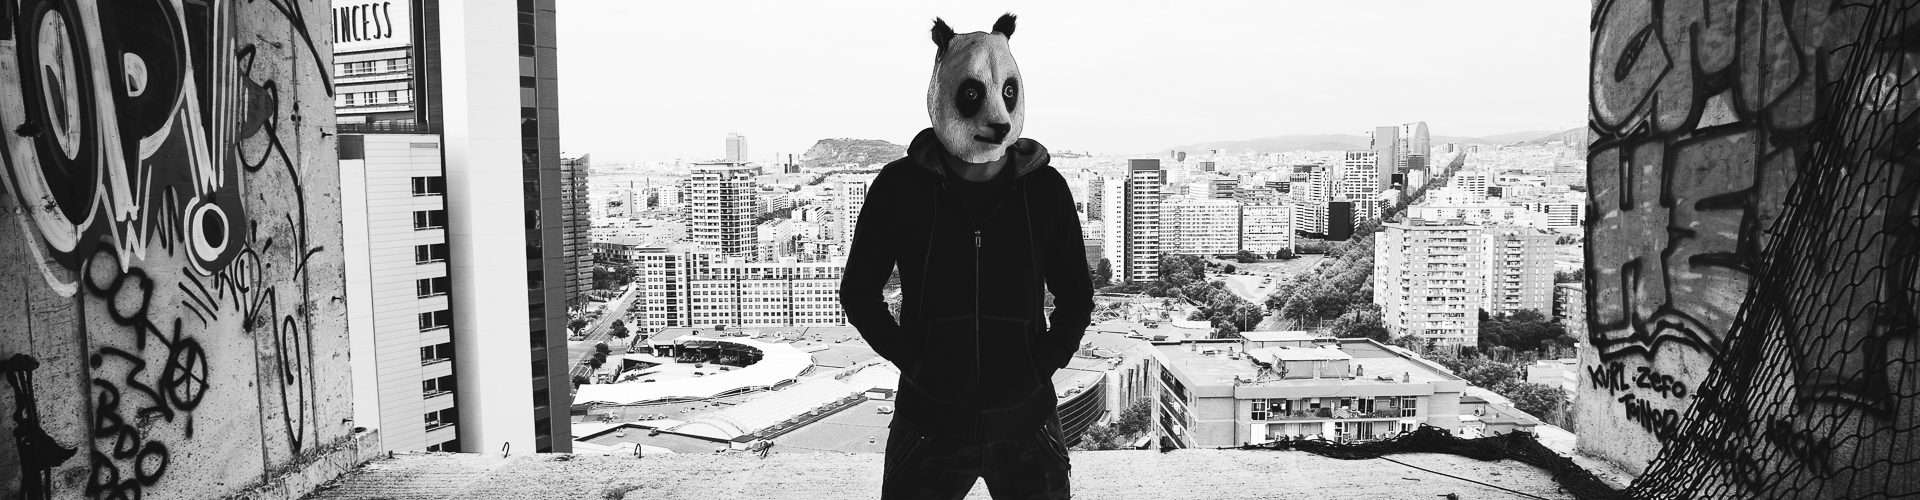 Panda urbex - Crédits : Gauvin Pictures